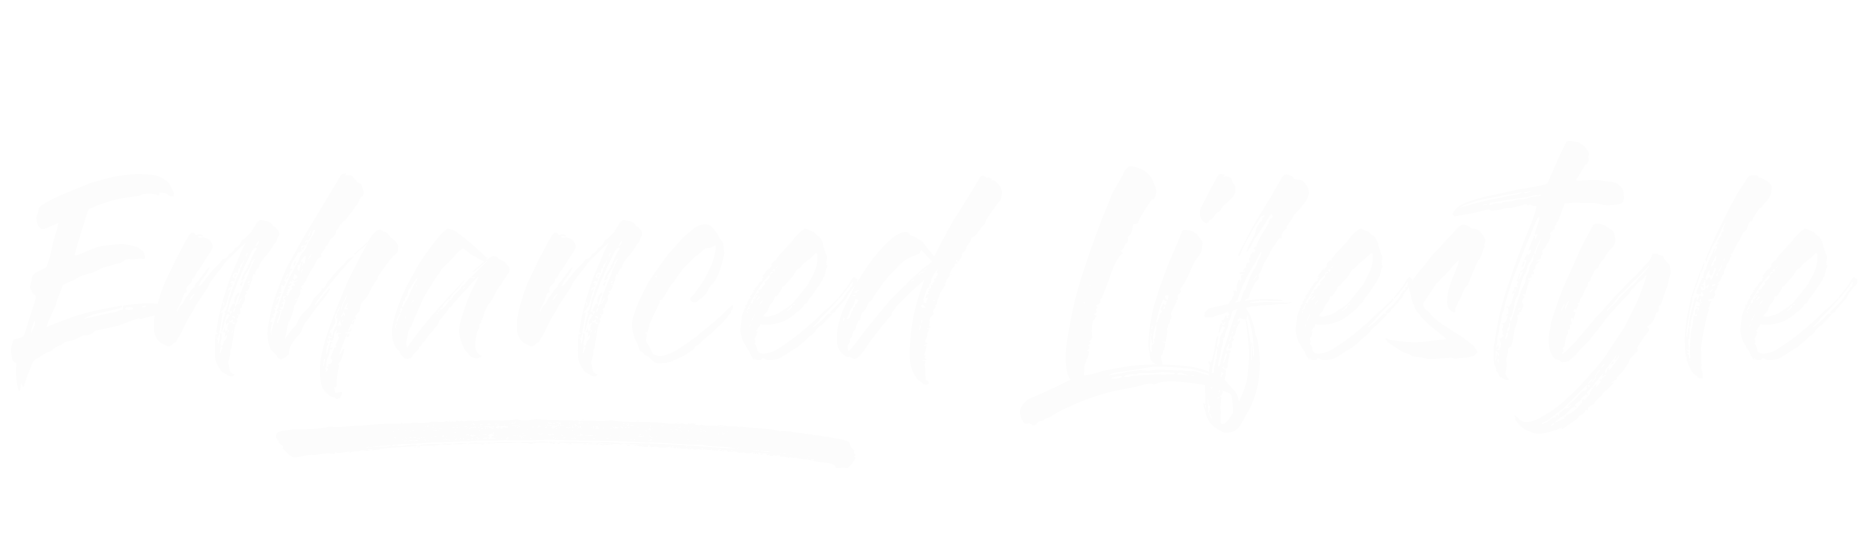 https://levivo.ca/wp-content/uploads/2021/11/vivo-enhanced-lifestyle-blanc.png